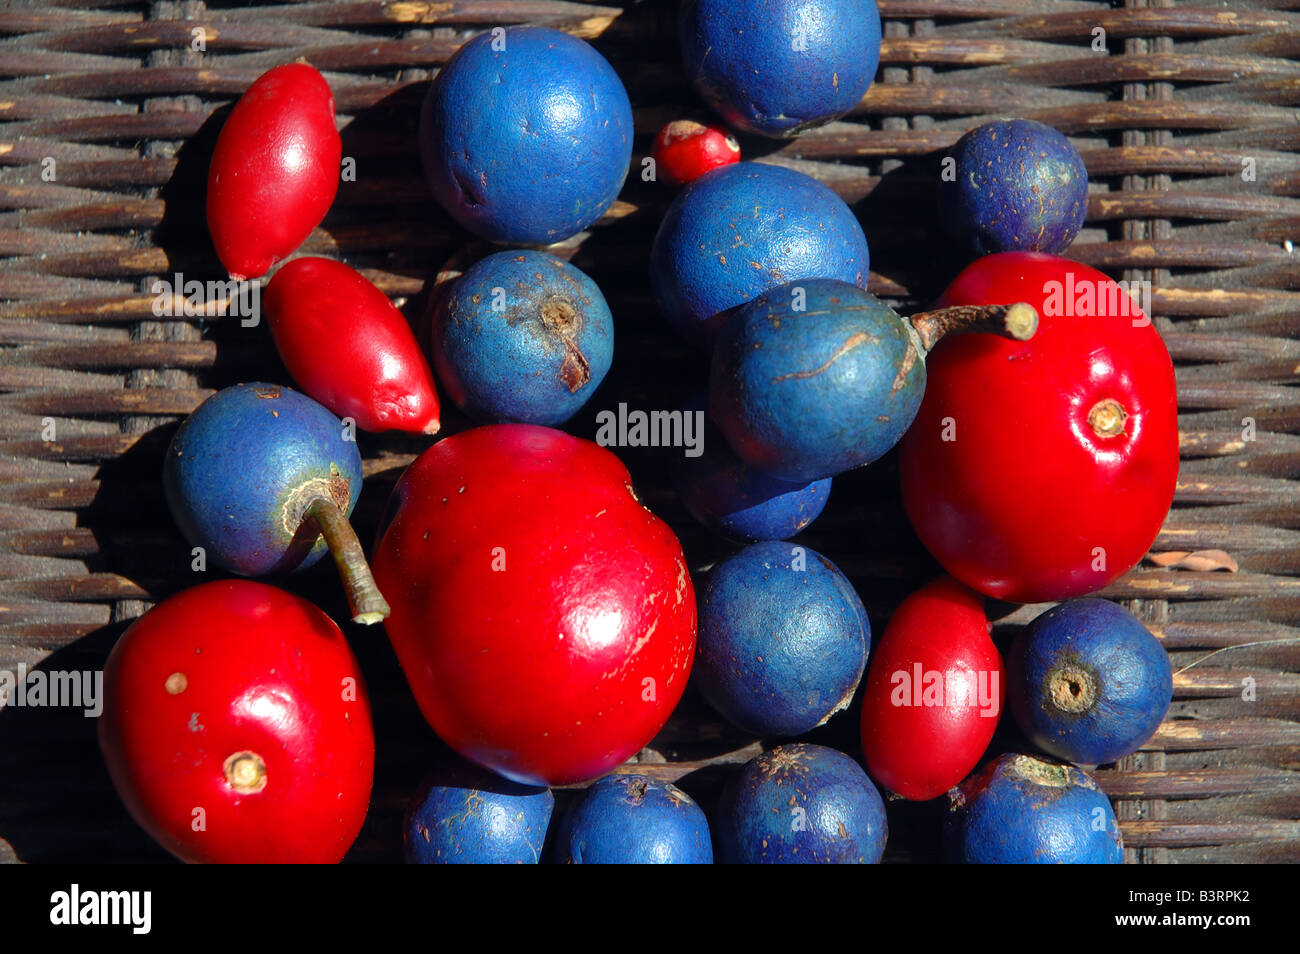 Tropical rainforest fruits including blue quandong (Elaeocarpus grandis), northern Queensland, Australia Stock Photo